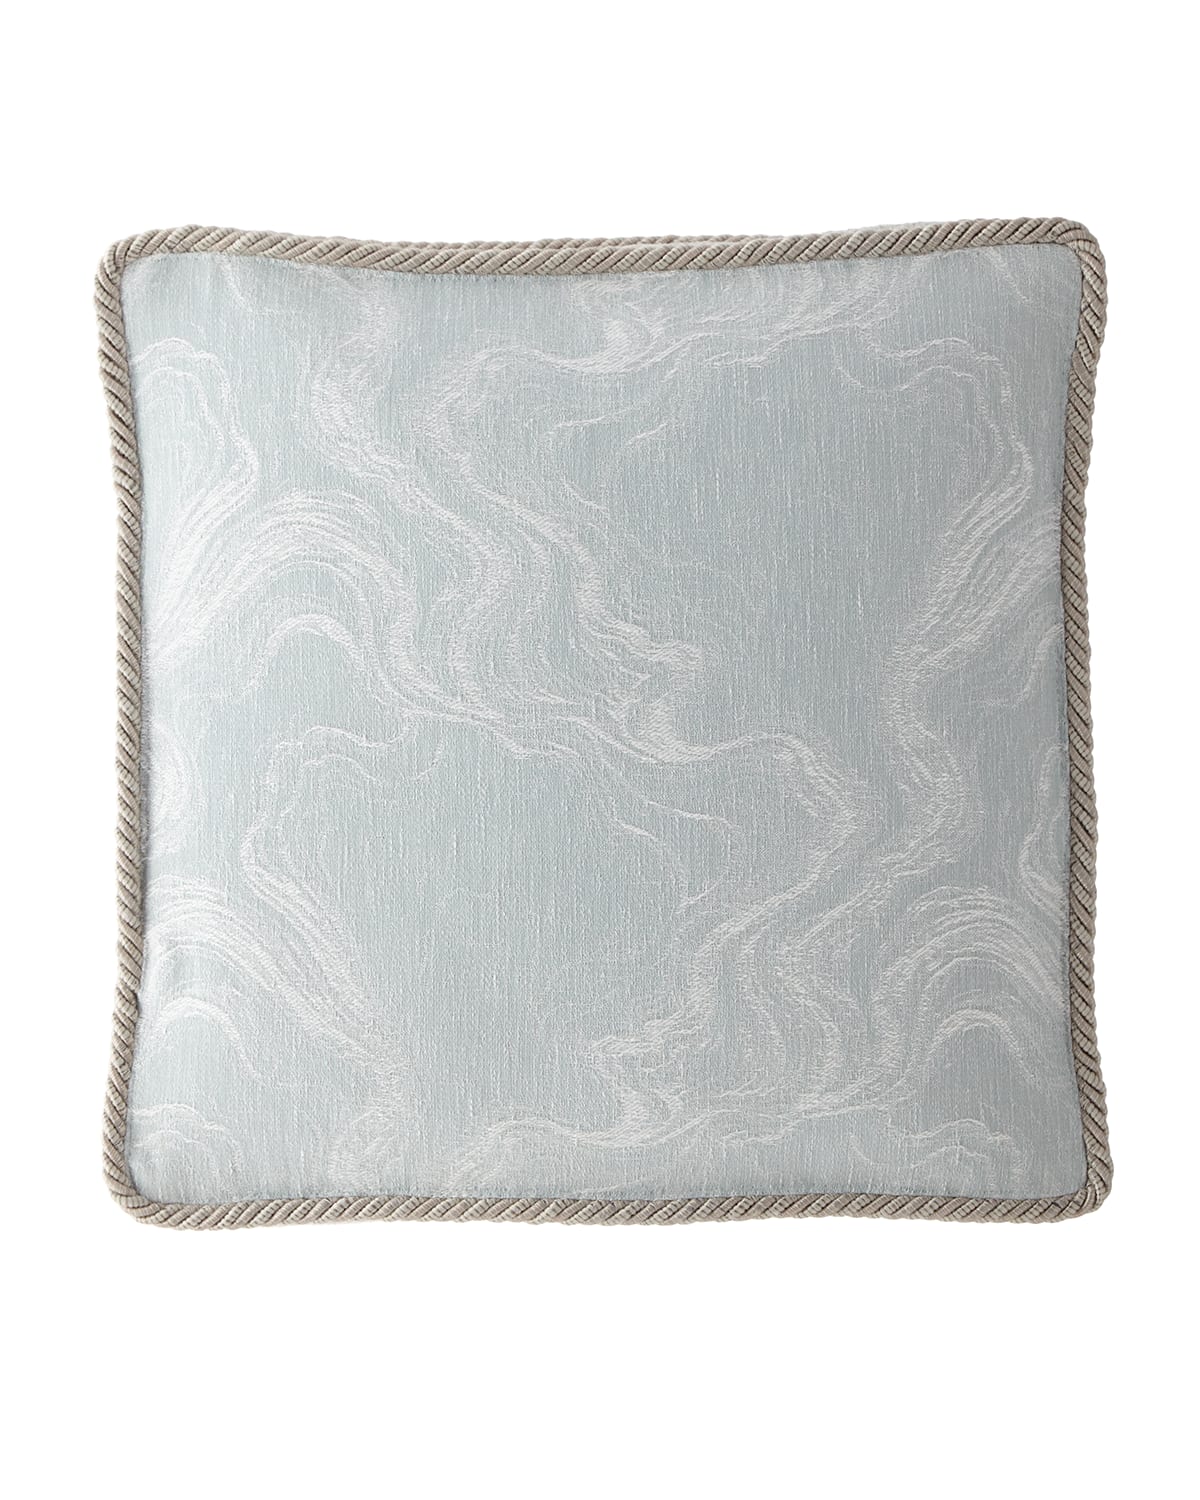 Image Dian Austin Couture Home Quartzite Boxed Square Pillow